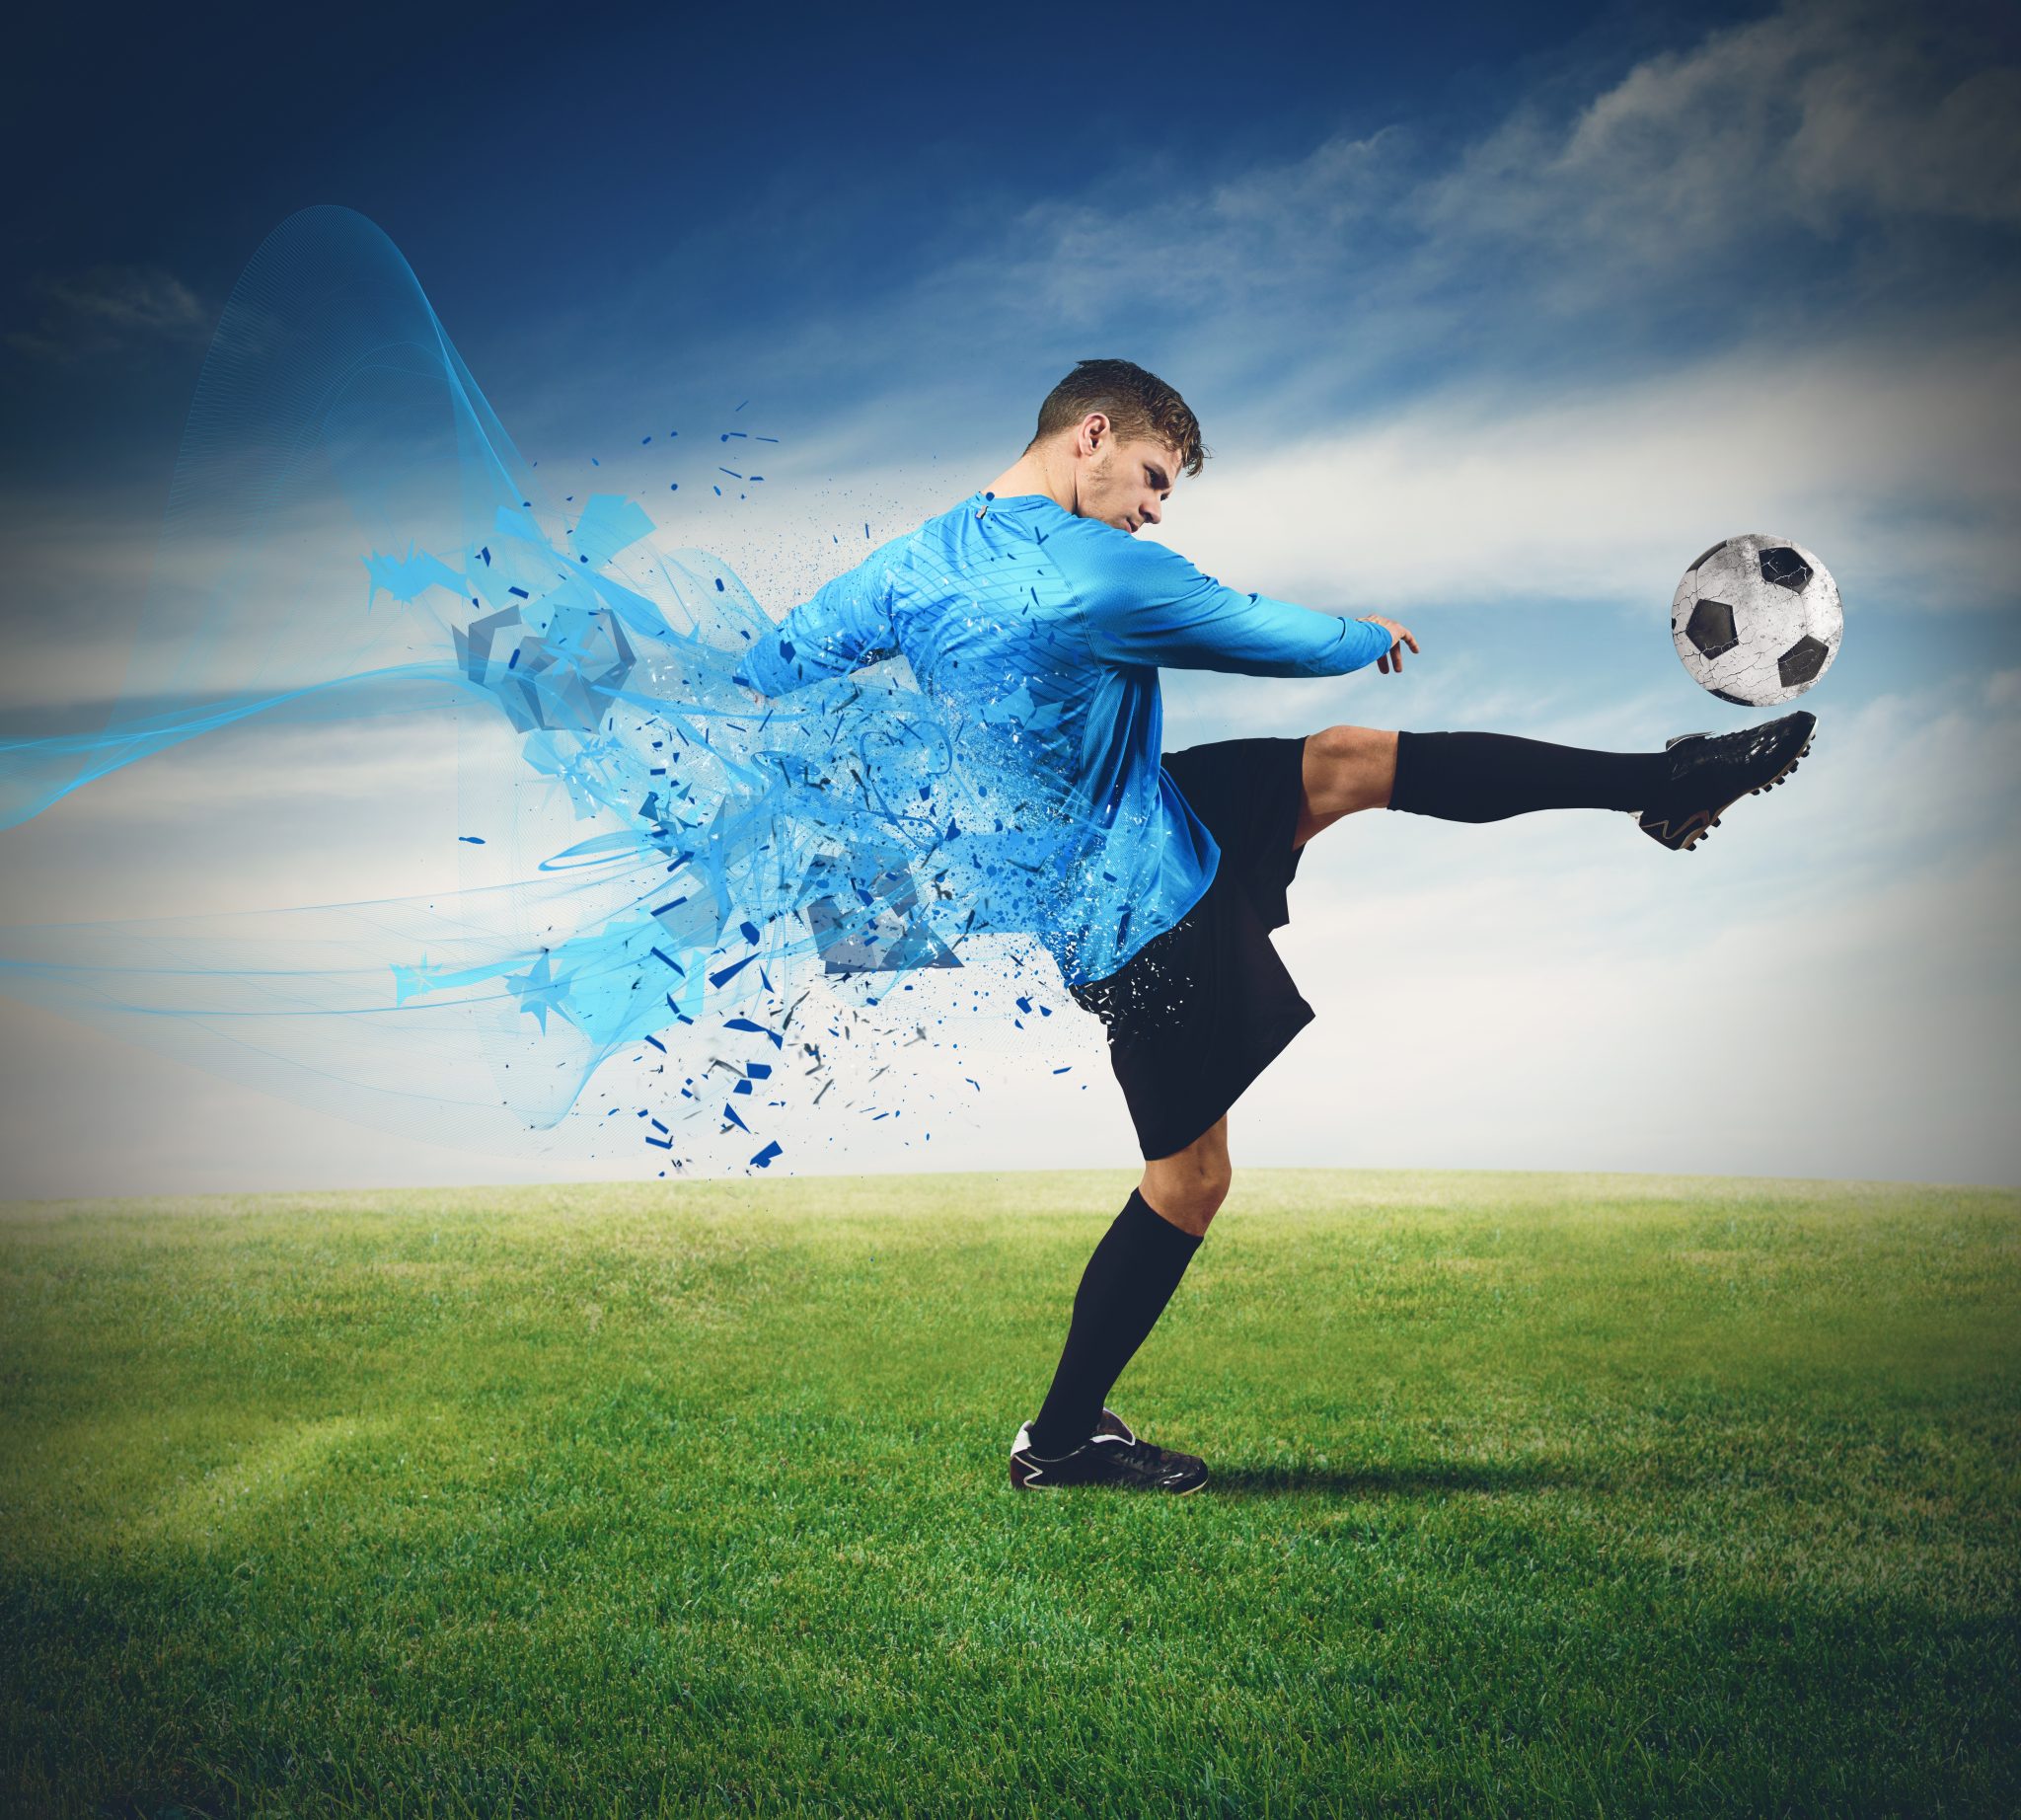 Soccer player kicks ball